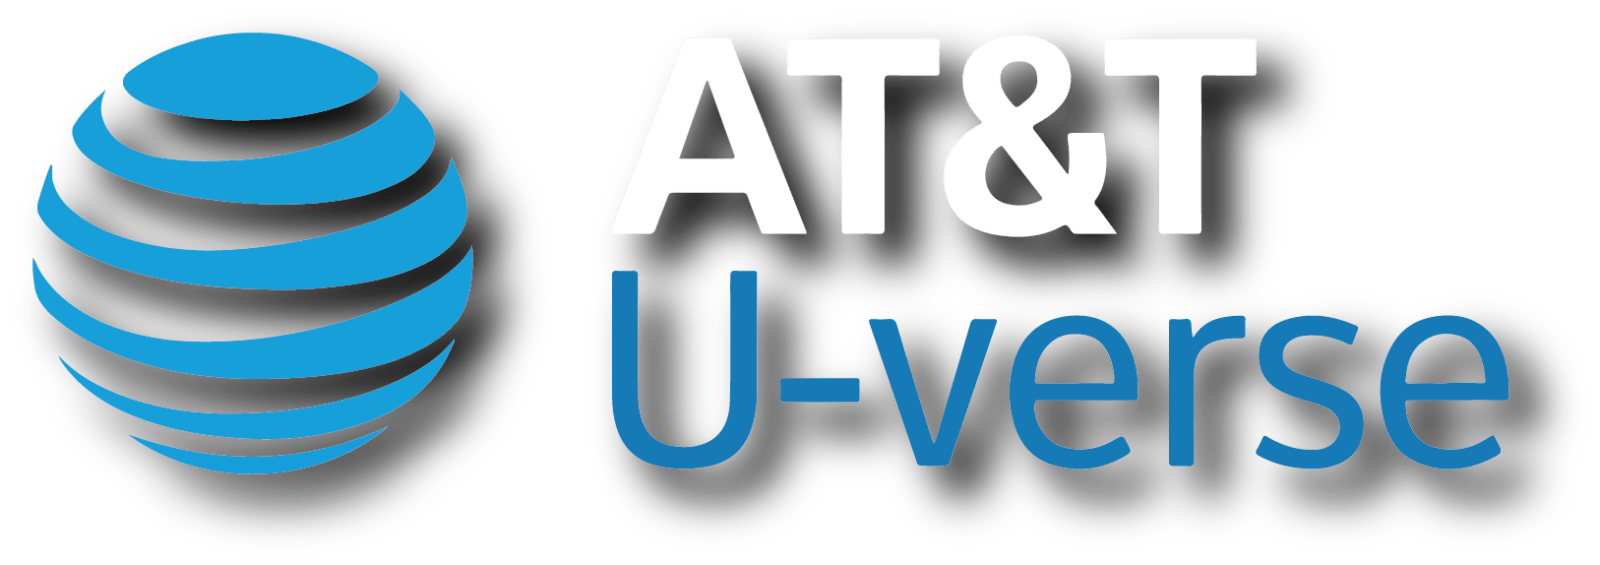 AT&T U-verse TV, Internet & Phone Packages & Bundles Deals